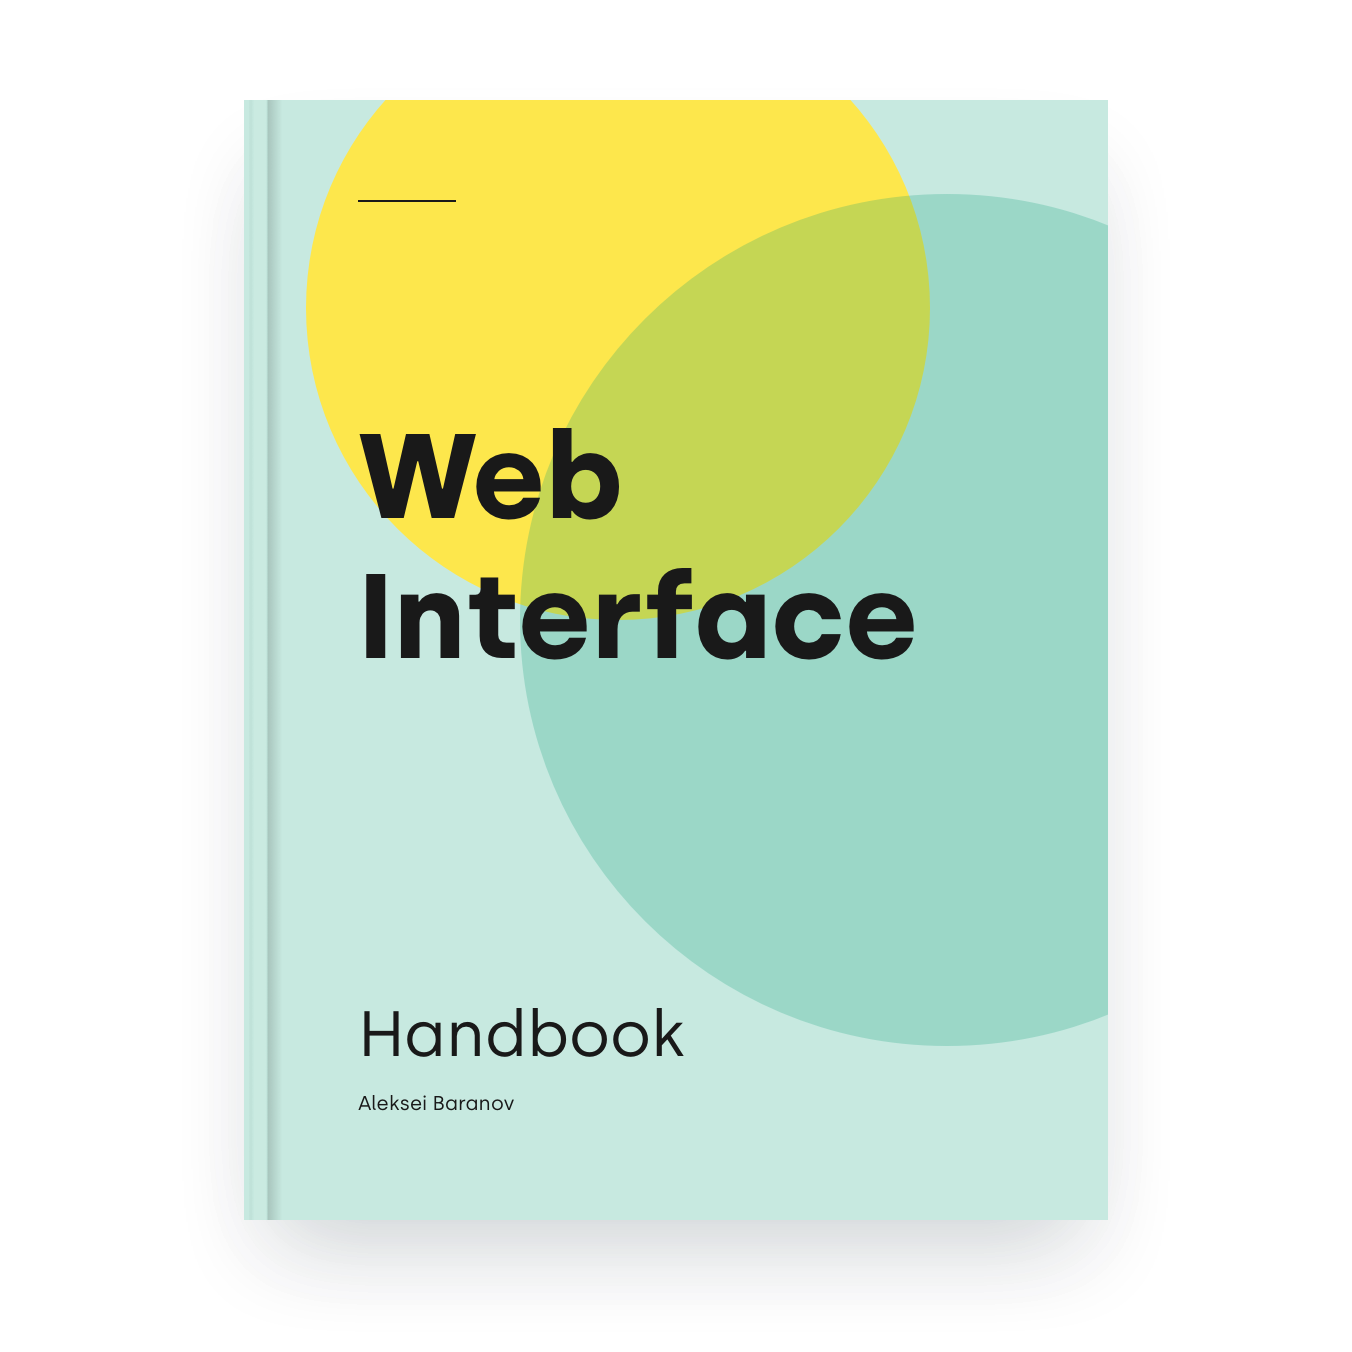 Web Interface handbook